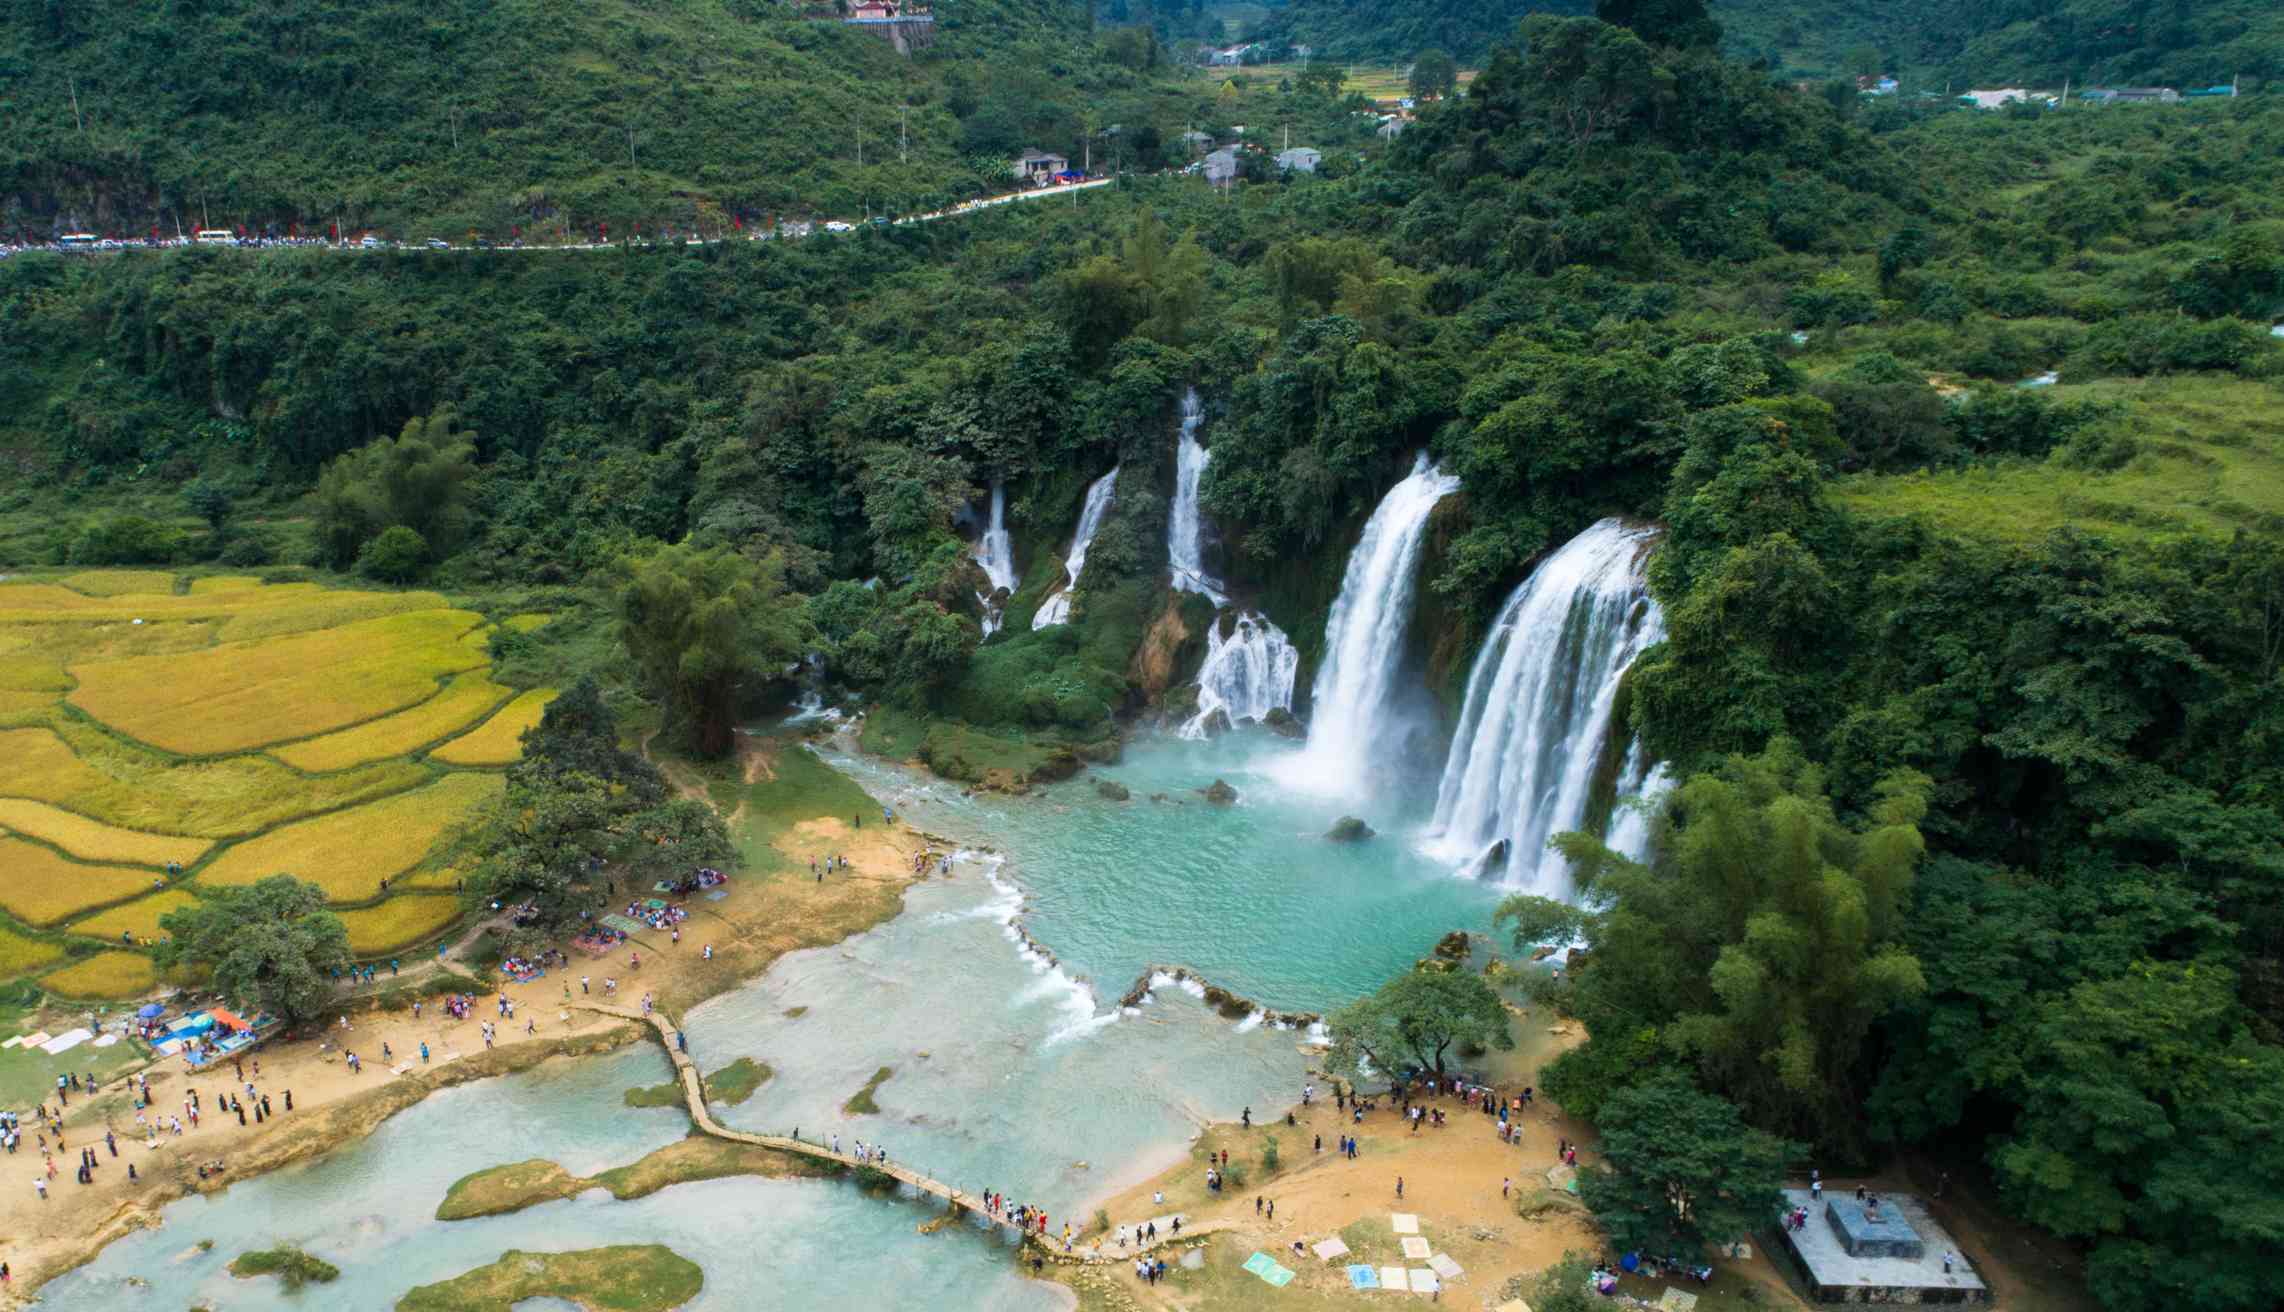 Ban Gioc-Detian瀑布的鸟瞰图，许多瀑布从郁郁葱葱的绿色山峰流入一个充满清澈绿色水的池塘＂width=